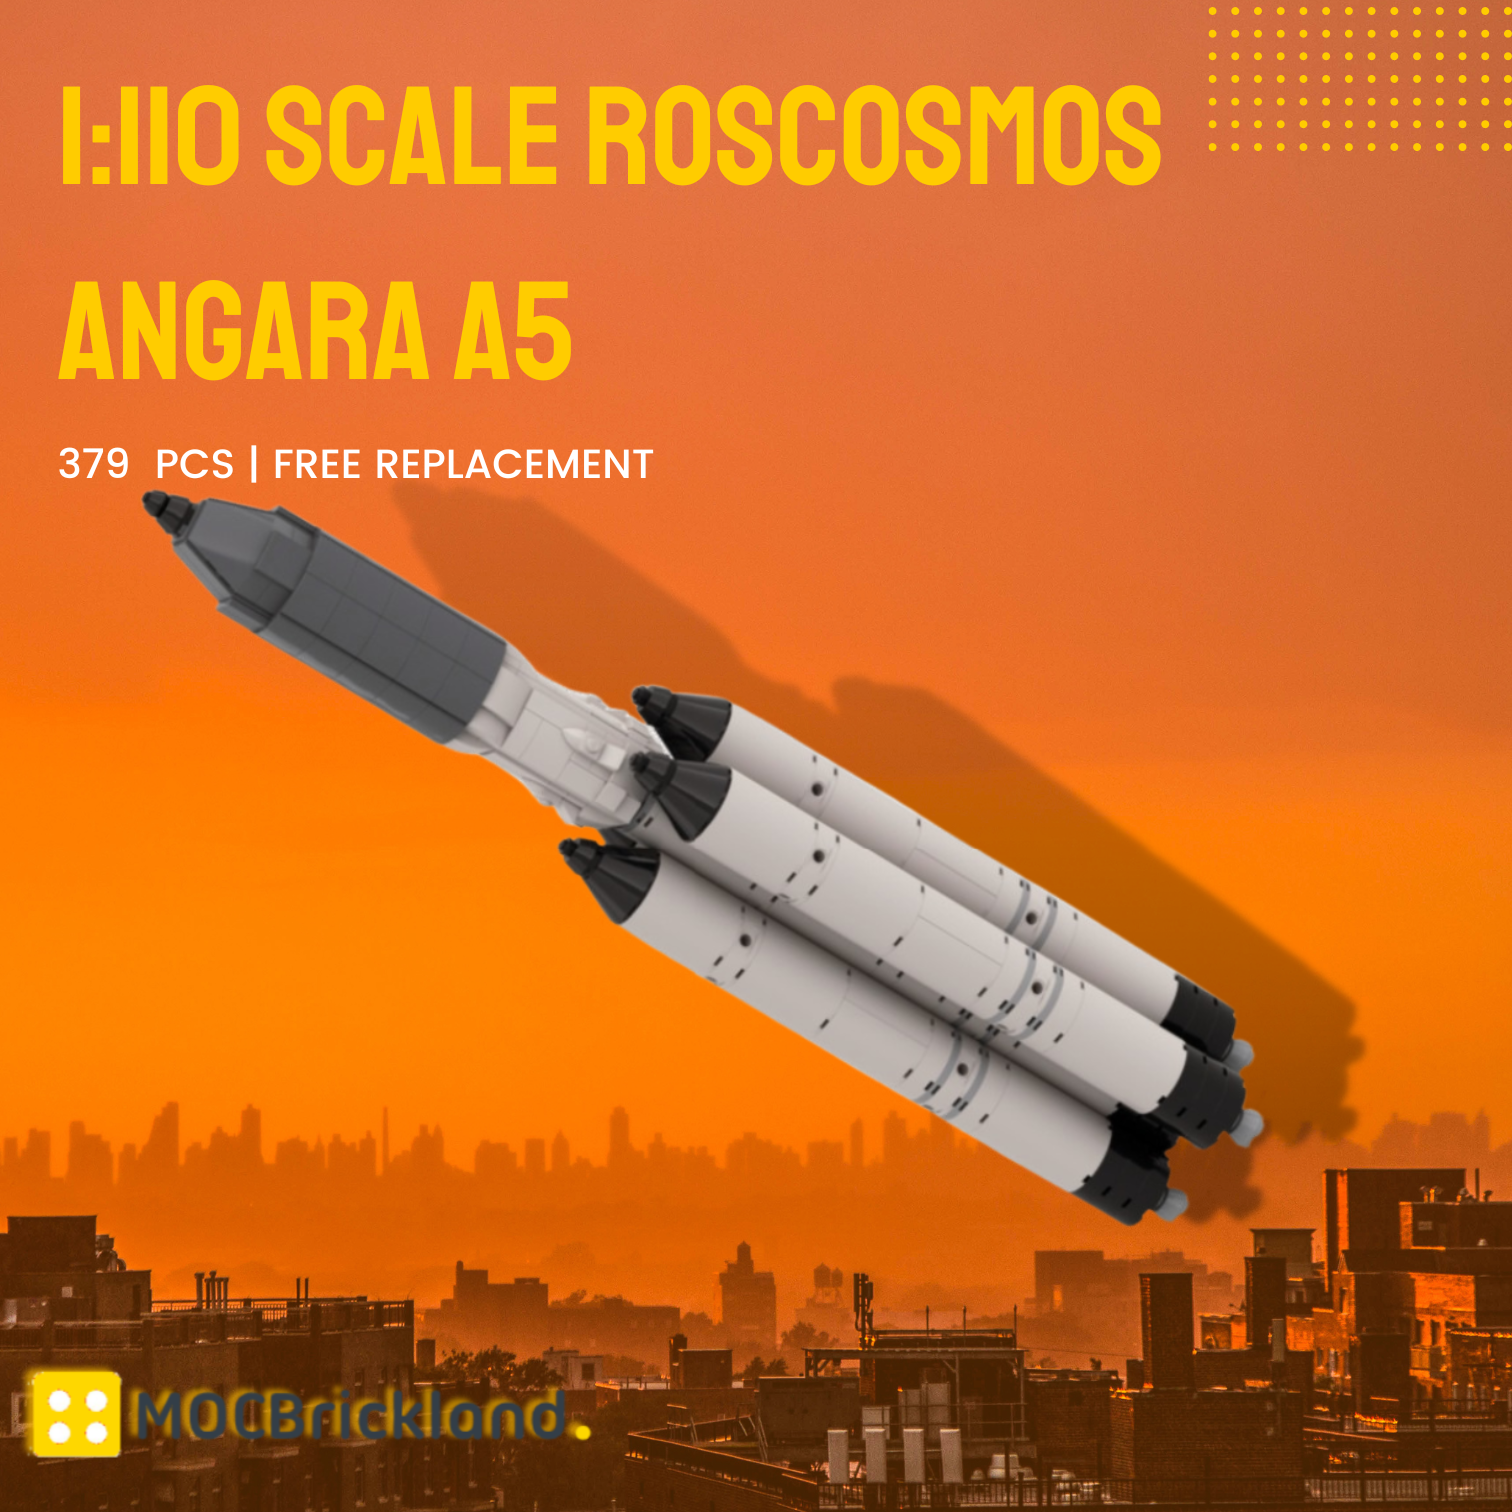 Space MOC-82322 1:110 Scale Roscosmos Angara MOCBRICKLAND